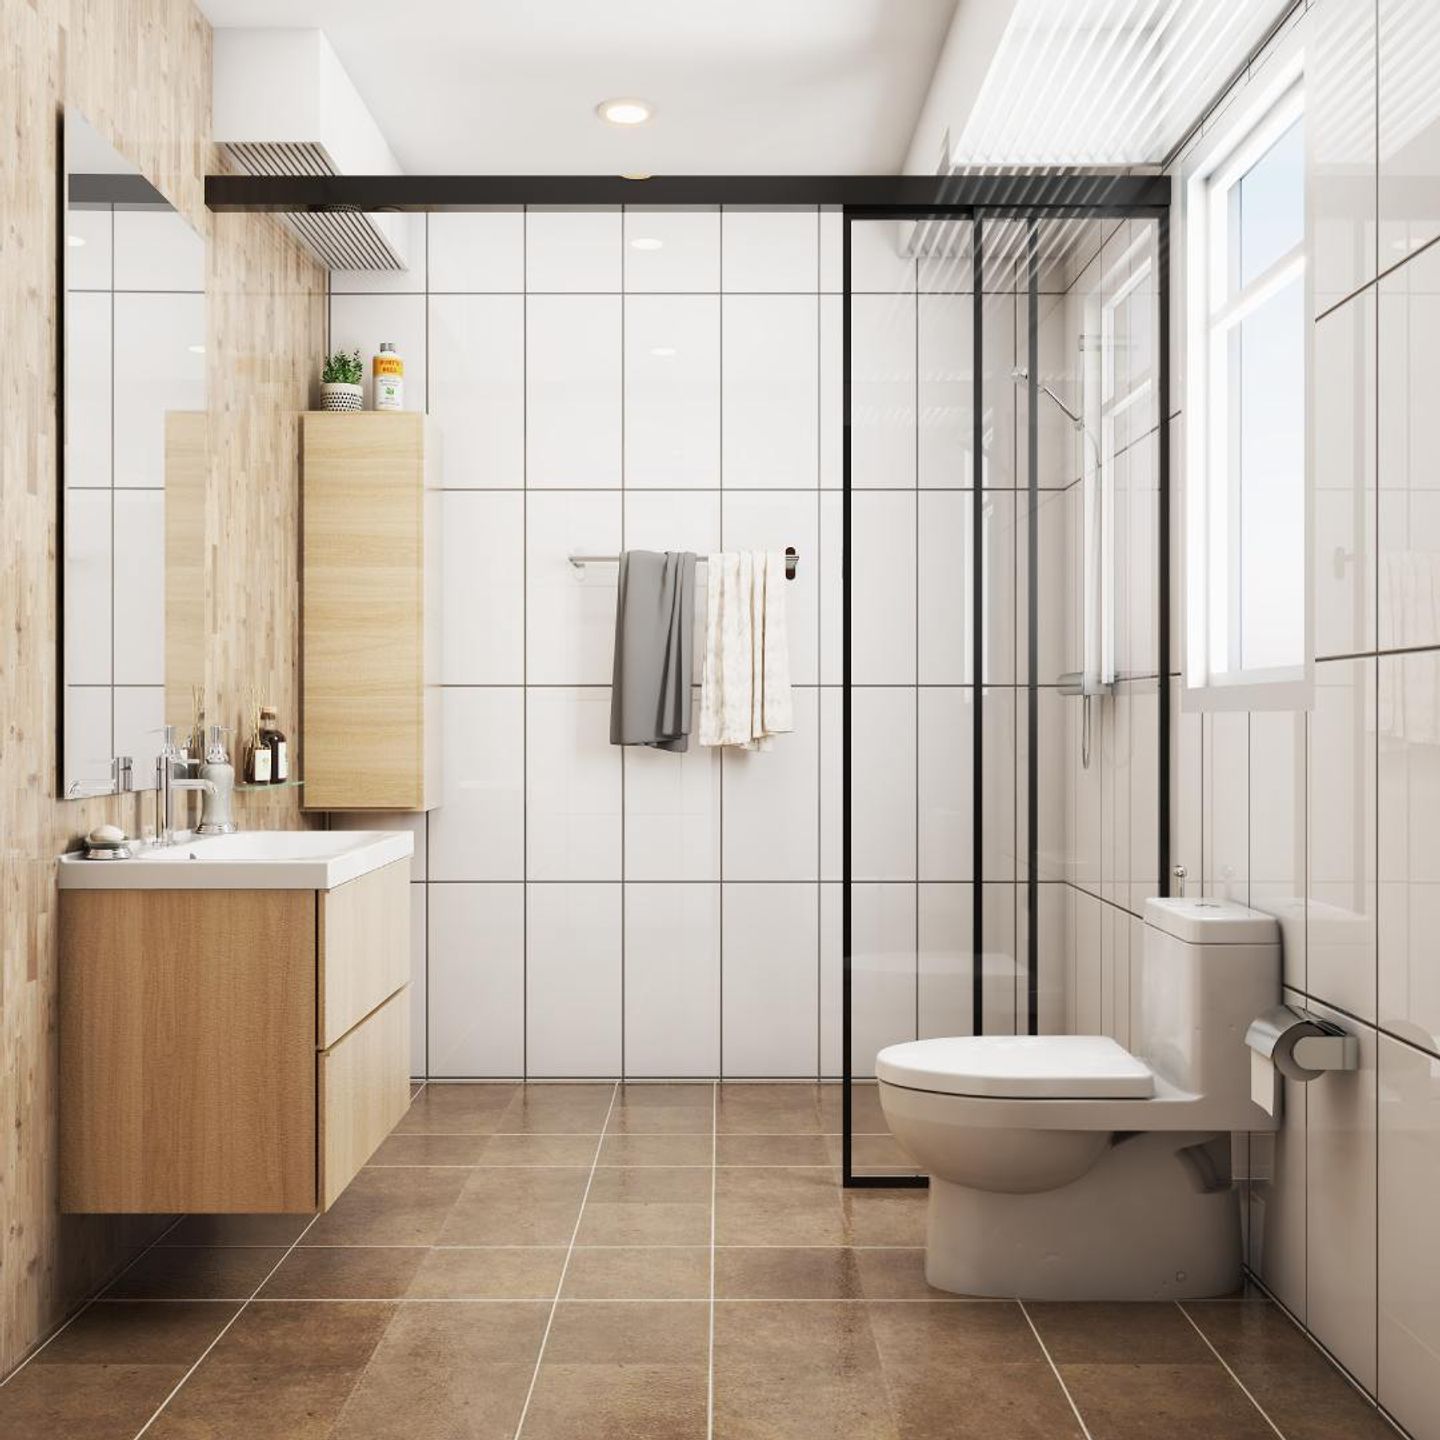 Modern Bathroom Design With A Wooden Vanity - Livspace